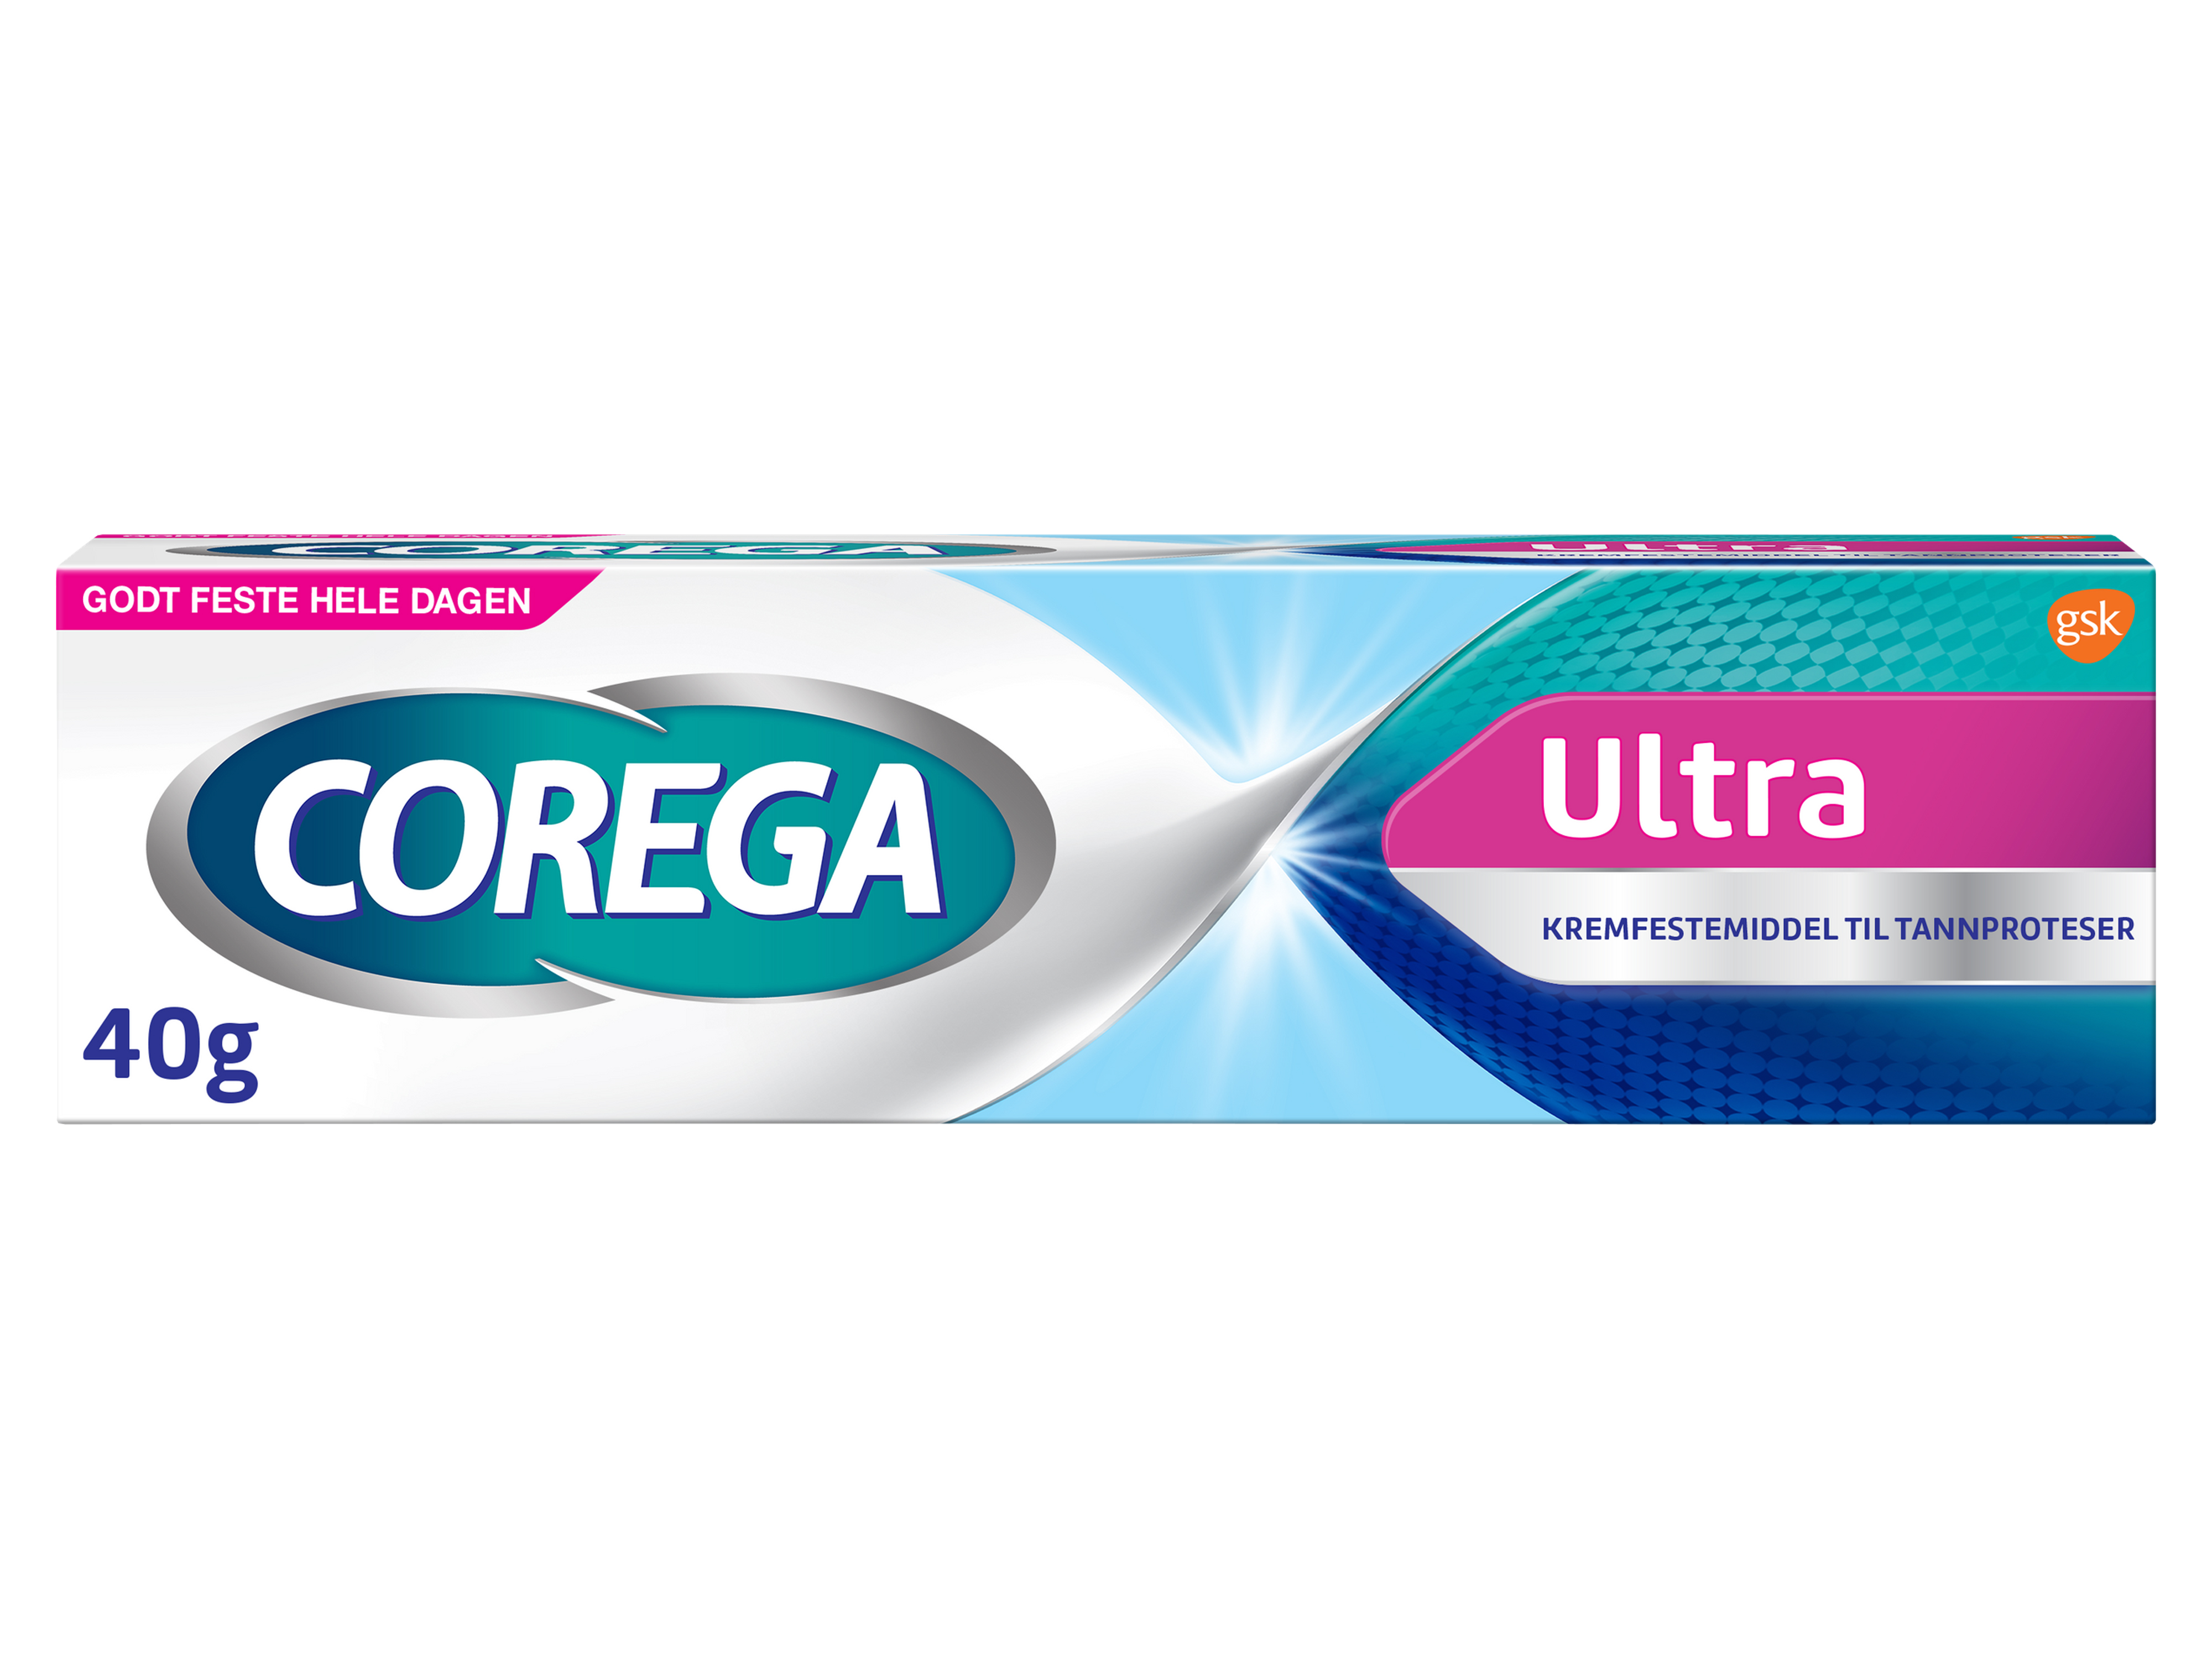 Corega Ultra krem festemiddel, 40 gram